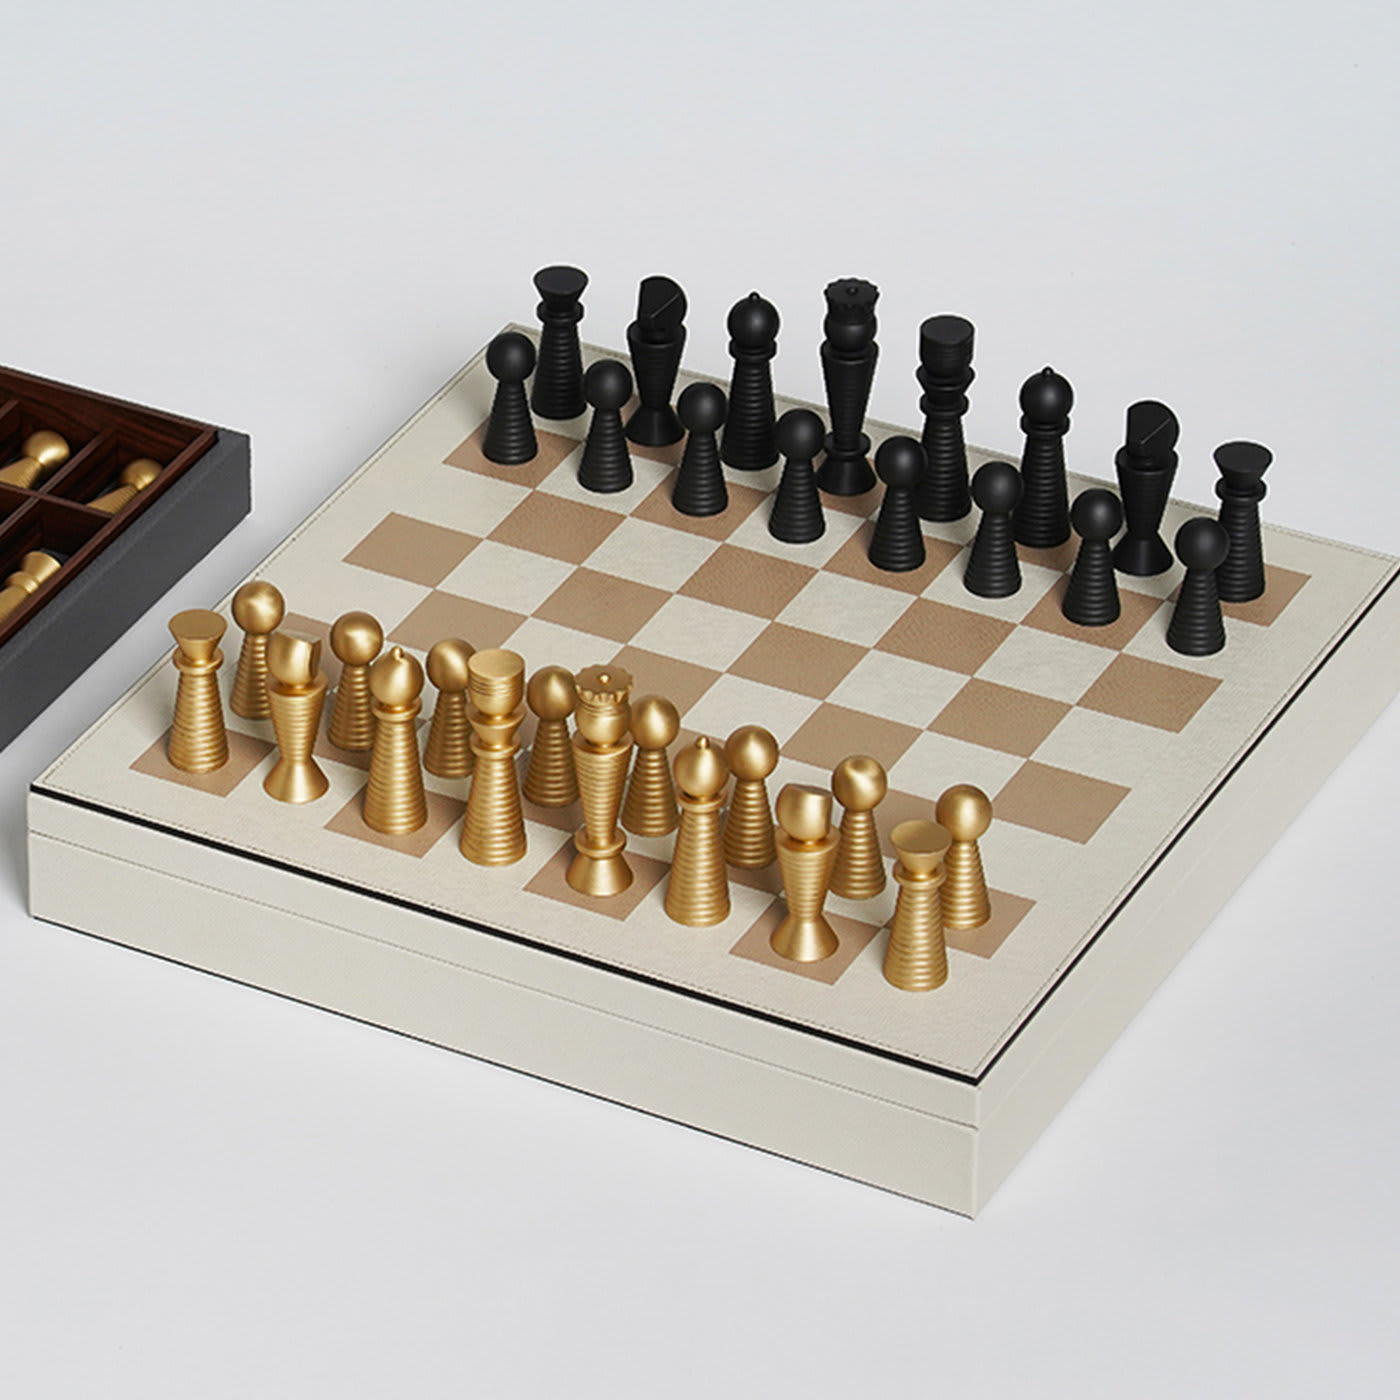 White Leather Chessboard - Pinetti